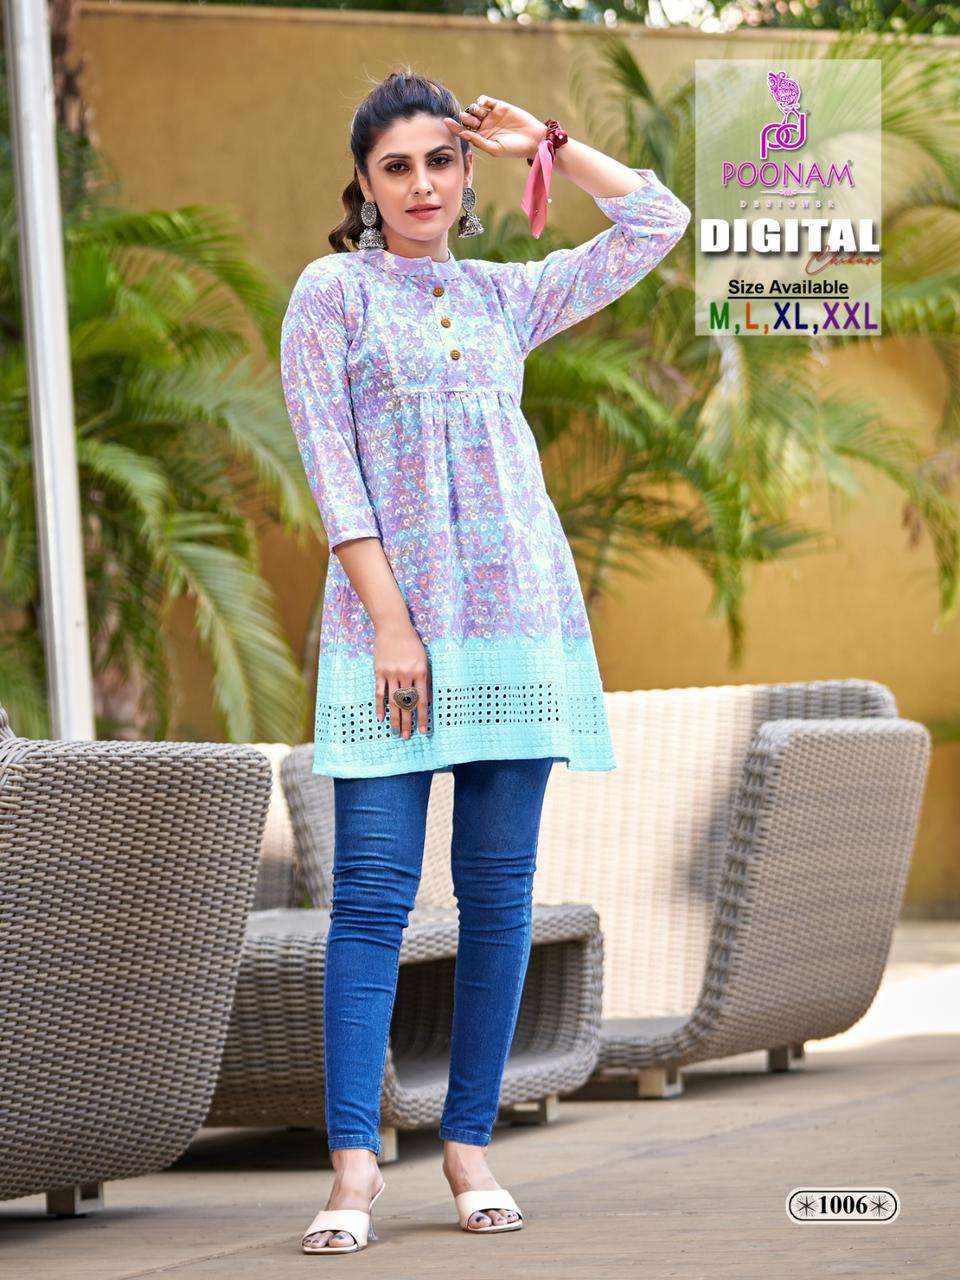 Poonam Designer Summer Special Launching Digital Chikan Tunic On Wholesale